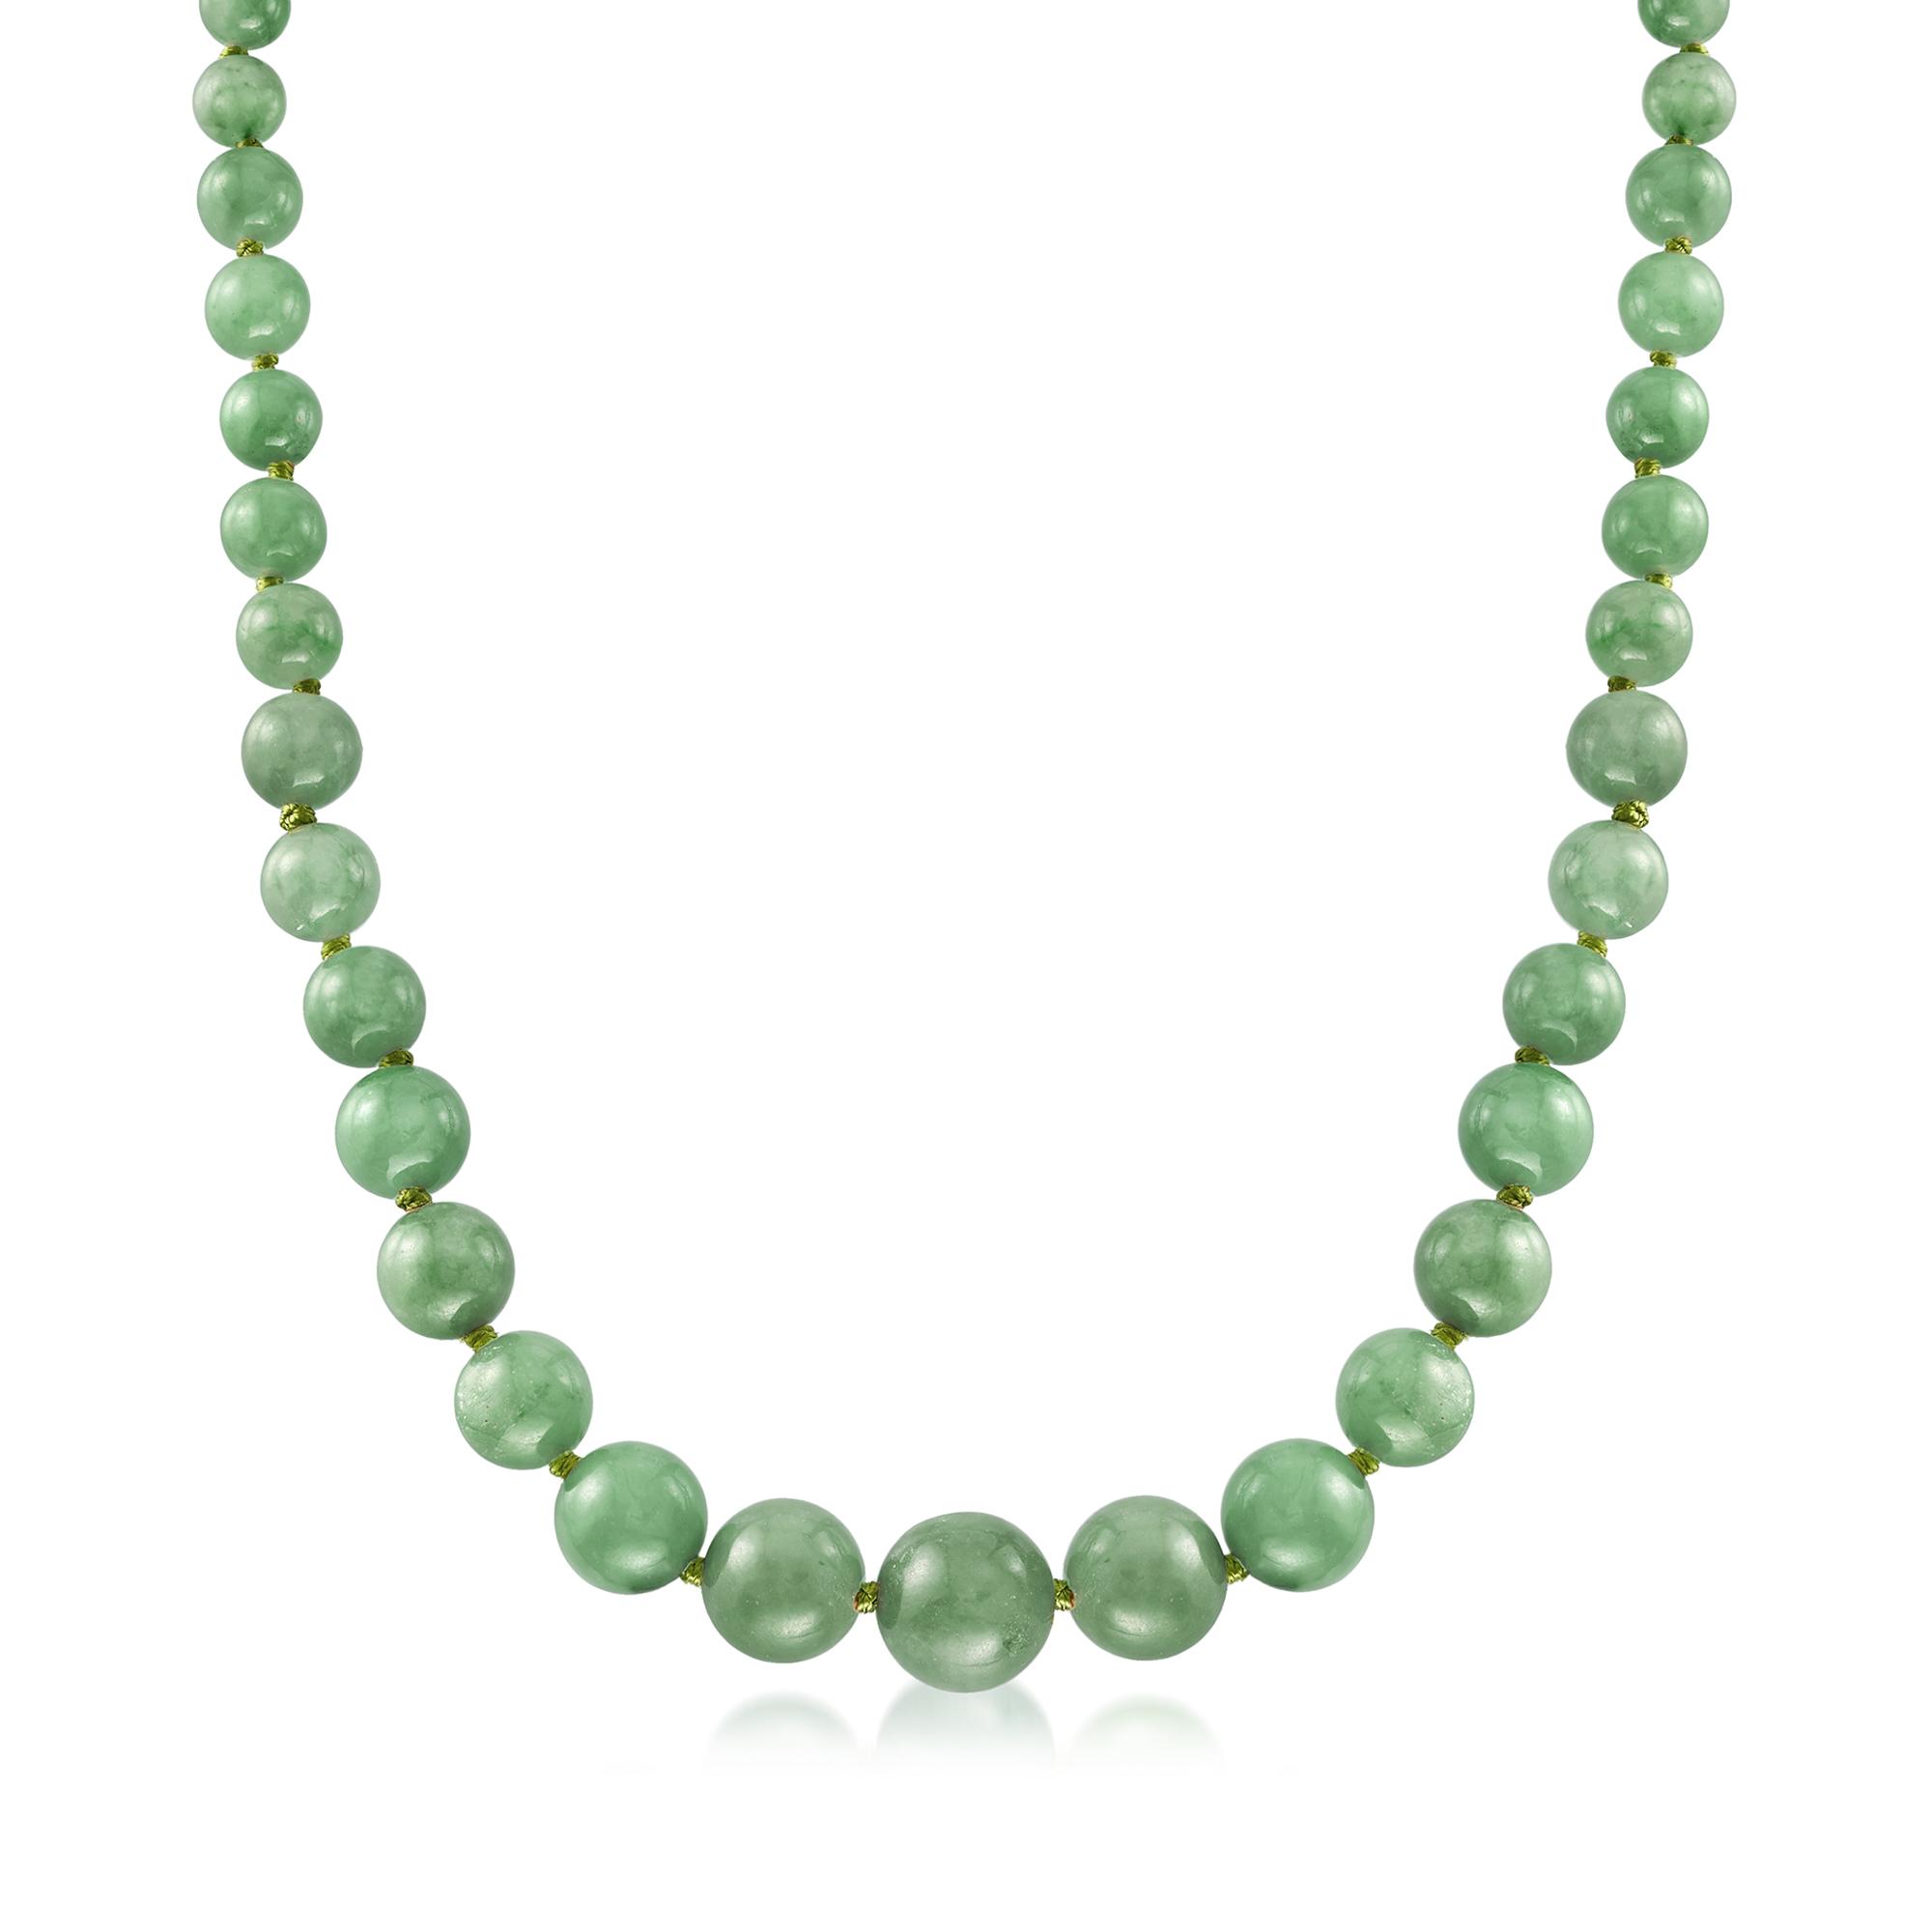 Emerald Beads Necklace Designs Shop Online – Gehna Shop